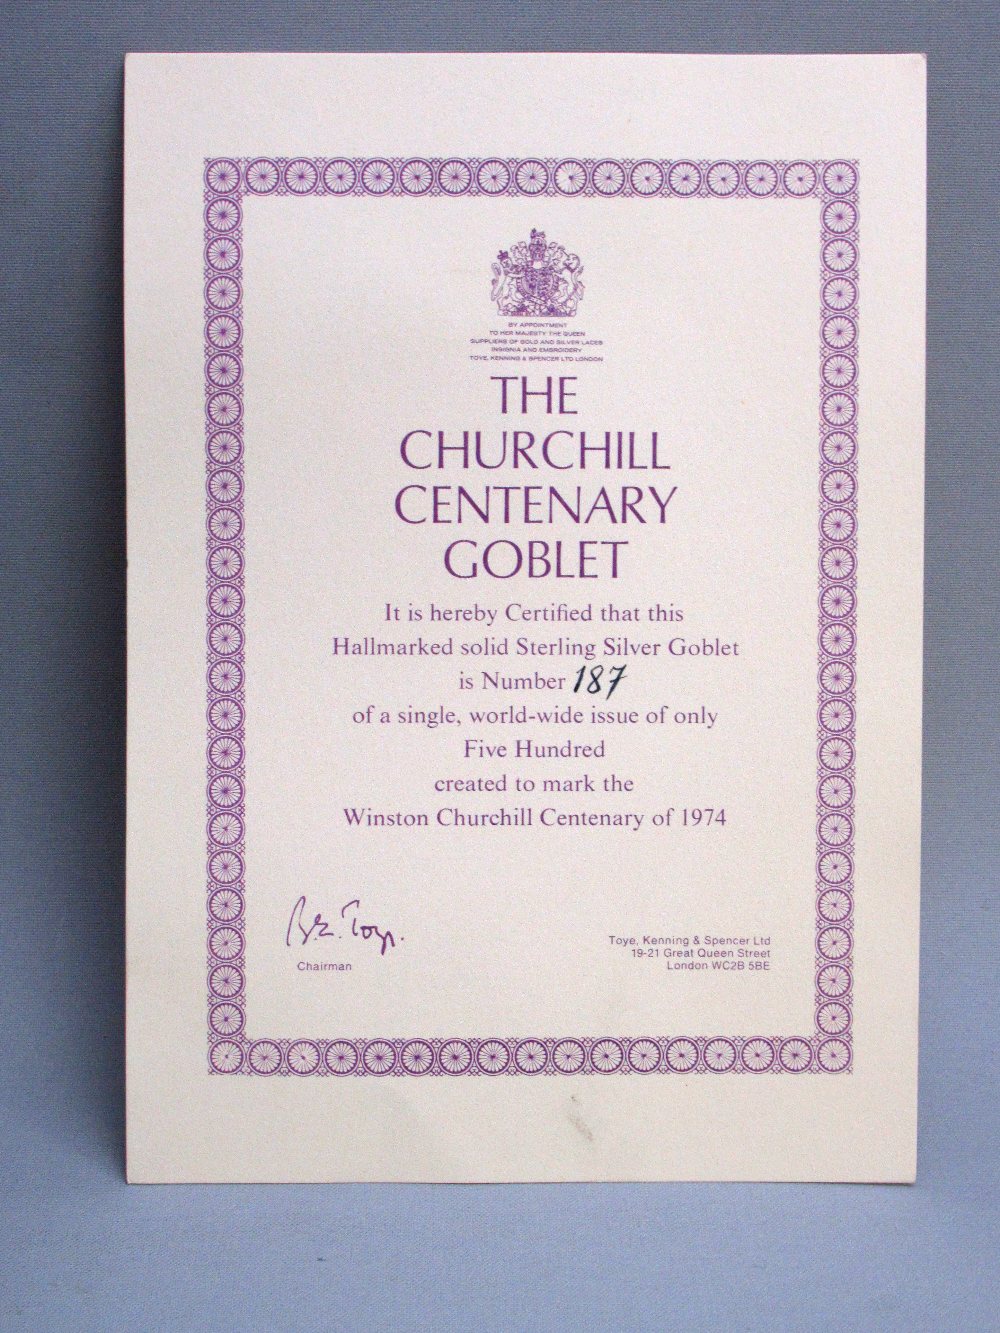 PAIR OF SILVER WINSTON CHURCHILL CENTENARY GOBLETS BY TOYE, KENNING & SPENCER LTD, BIRMINGHAM - Image 5 of 6